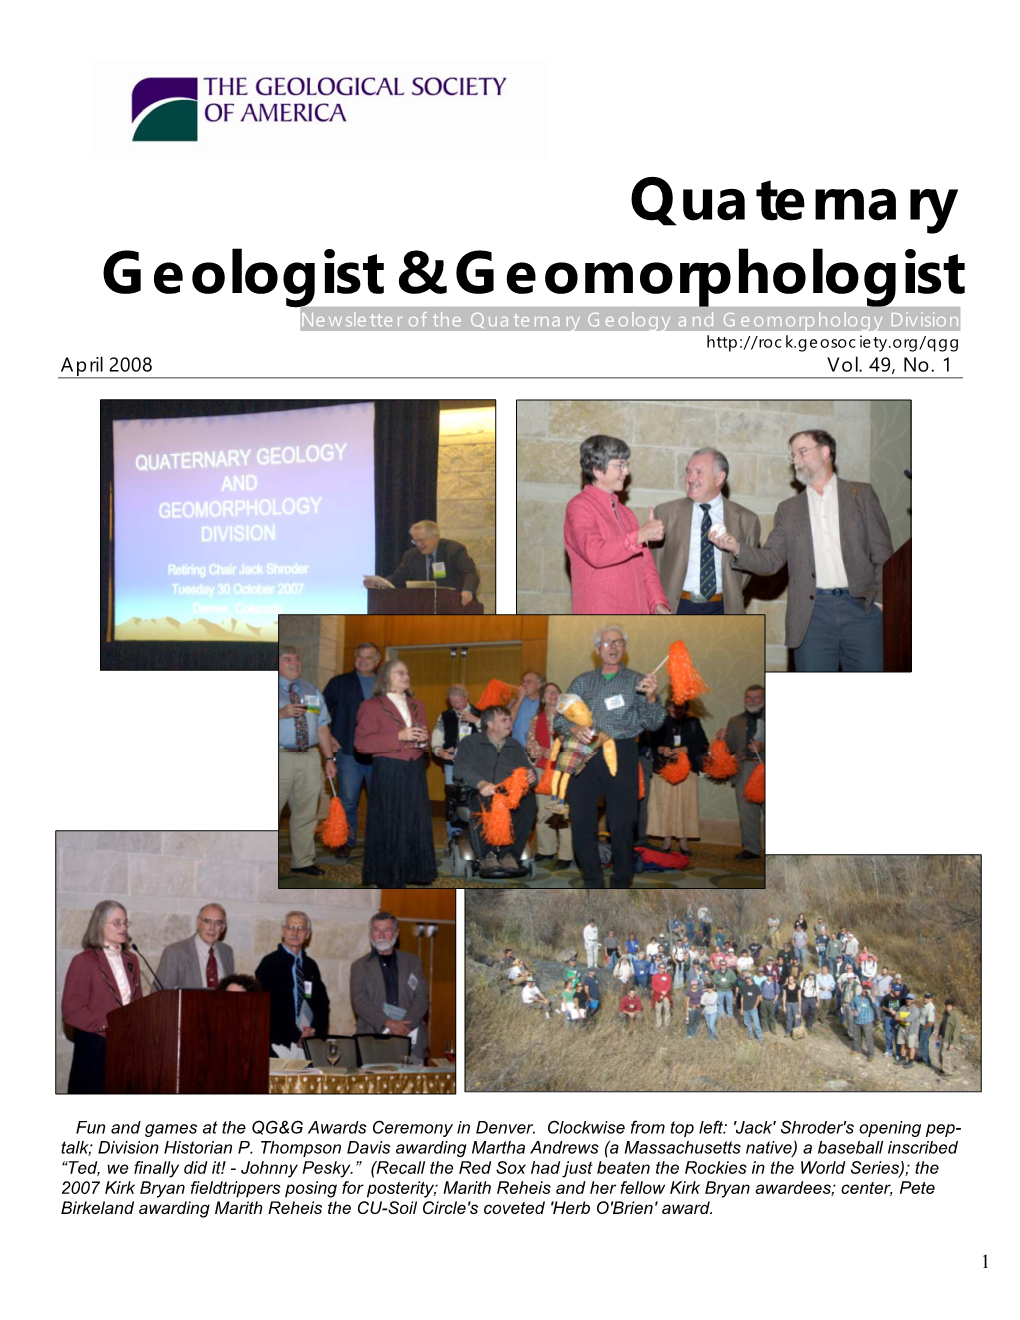 History of Geology Student Award